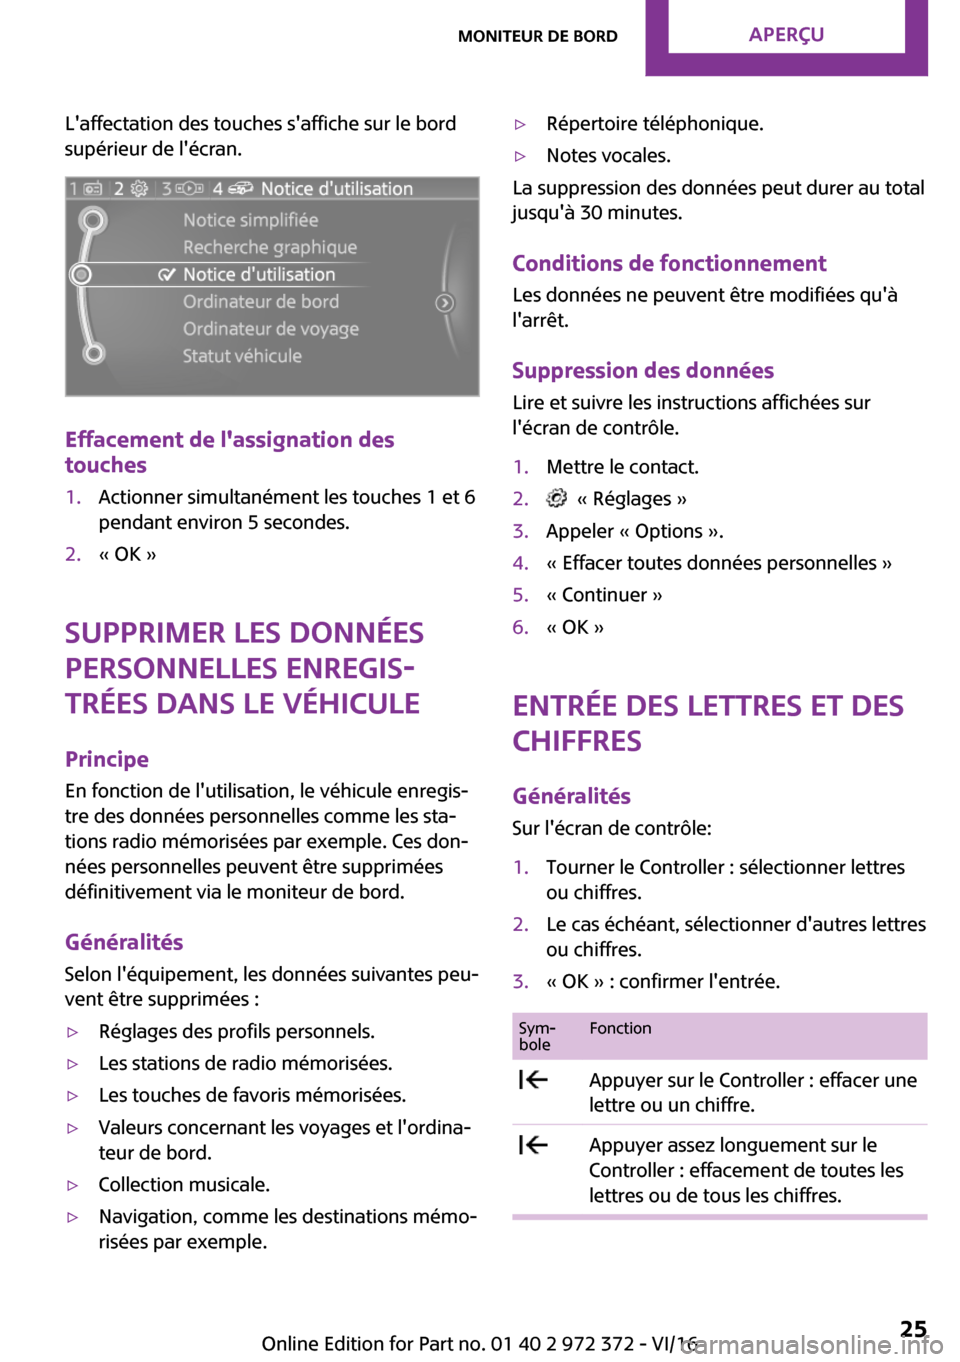 MINI Convertible 2016  Manuel du propriétaire (in French) �L��a�f�f�e�c�t�a�t�i�o�n� �d�e�s� �t�o�u�c�h�e�s� �s��a�f�f�i�c�h�e� �s�u�r� �l�e� �b�o�r�d
�s�u�p�é�r�i�e�u�r� �d�e� �l��é�c�r�a�n�.
�E�f�f�a�c�e�m�e�n�t��d�e��l��a�s�s�i�g�n�a�t�i�o�n��d�e